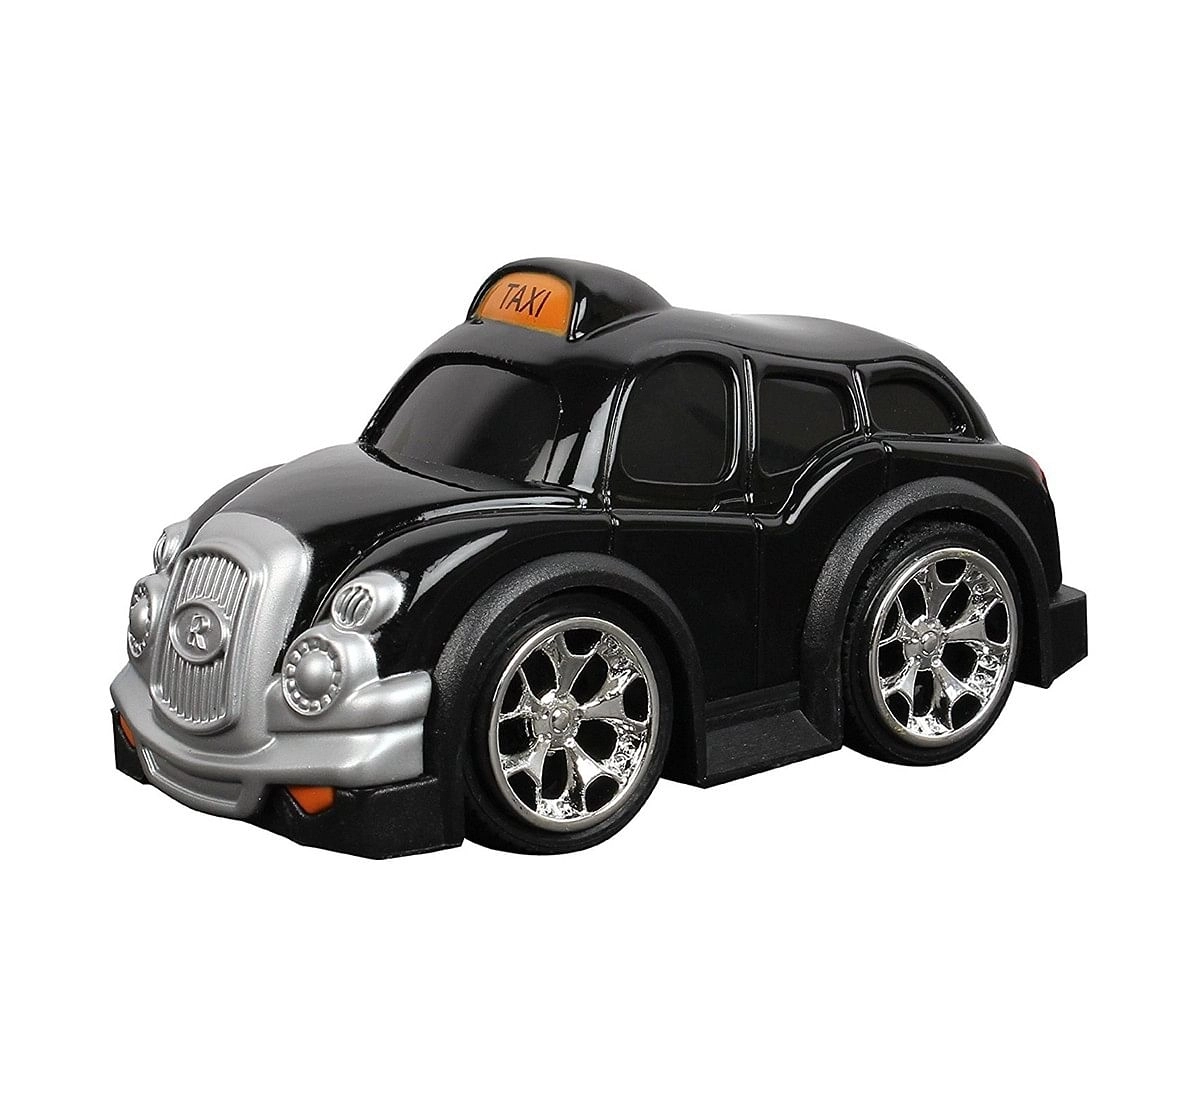 Hamleys Die-Cast Pullback London Taxi Toy (Black) Vehicles for Kids age 3Y+ (Black)